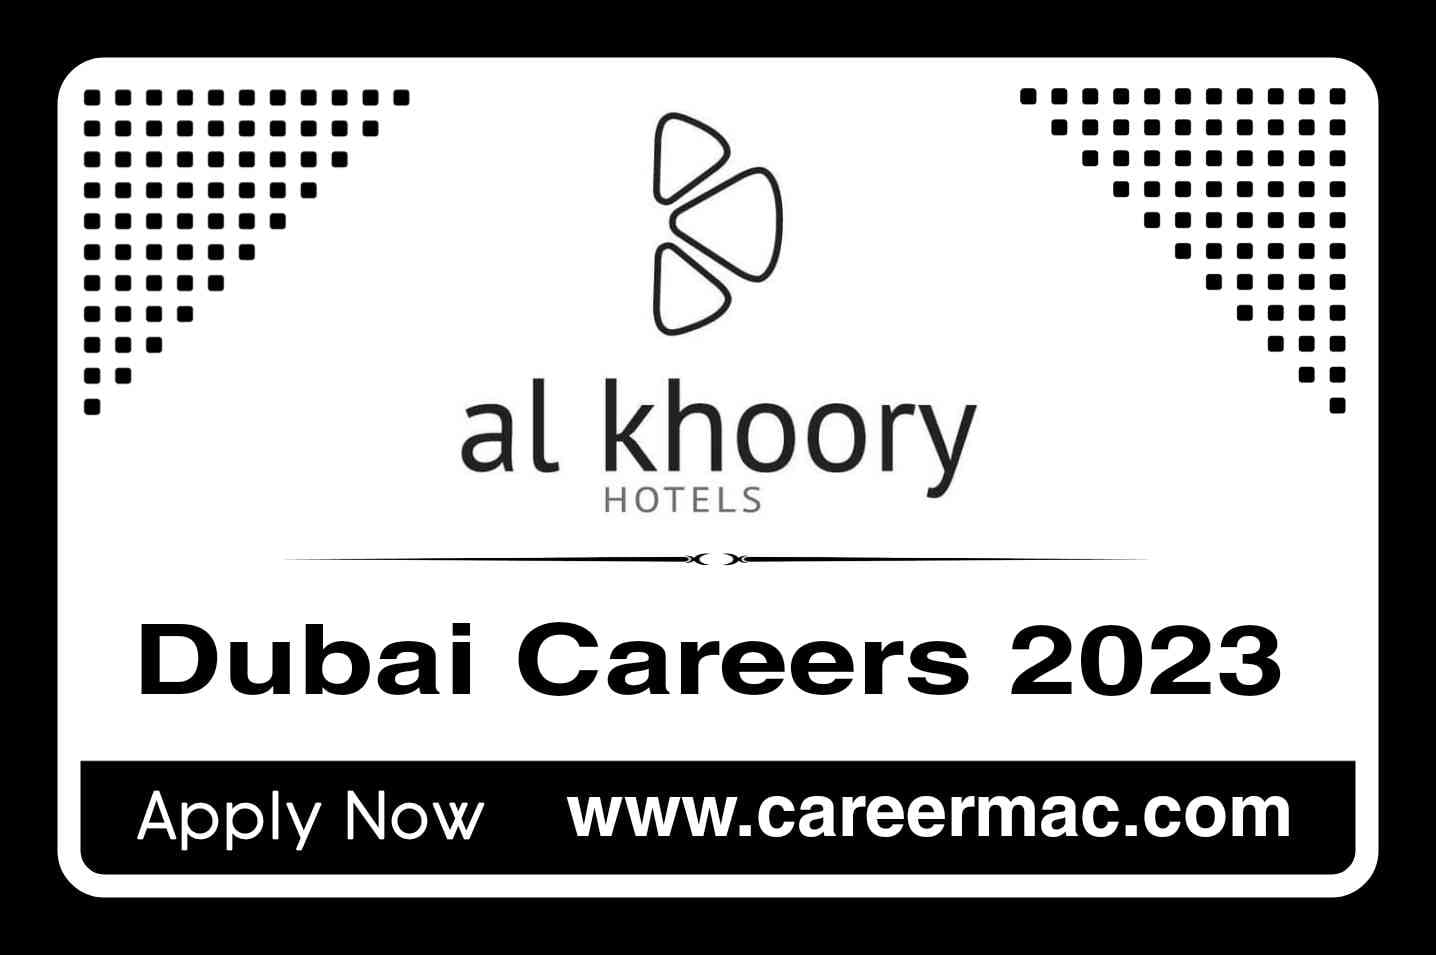 Al Khoory Hotels Careers 2023